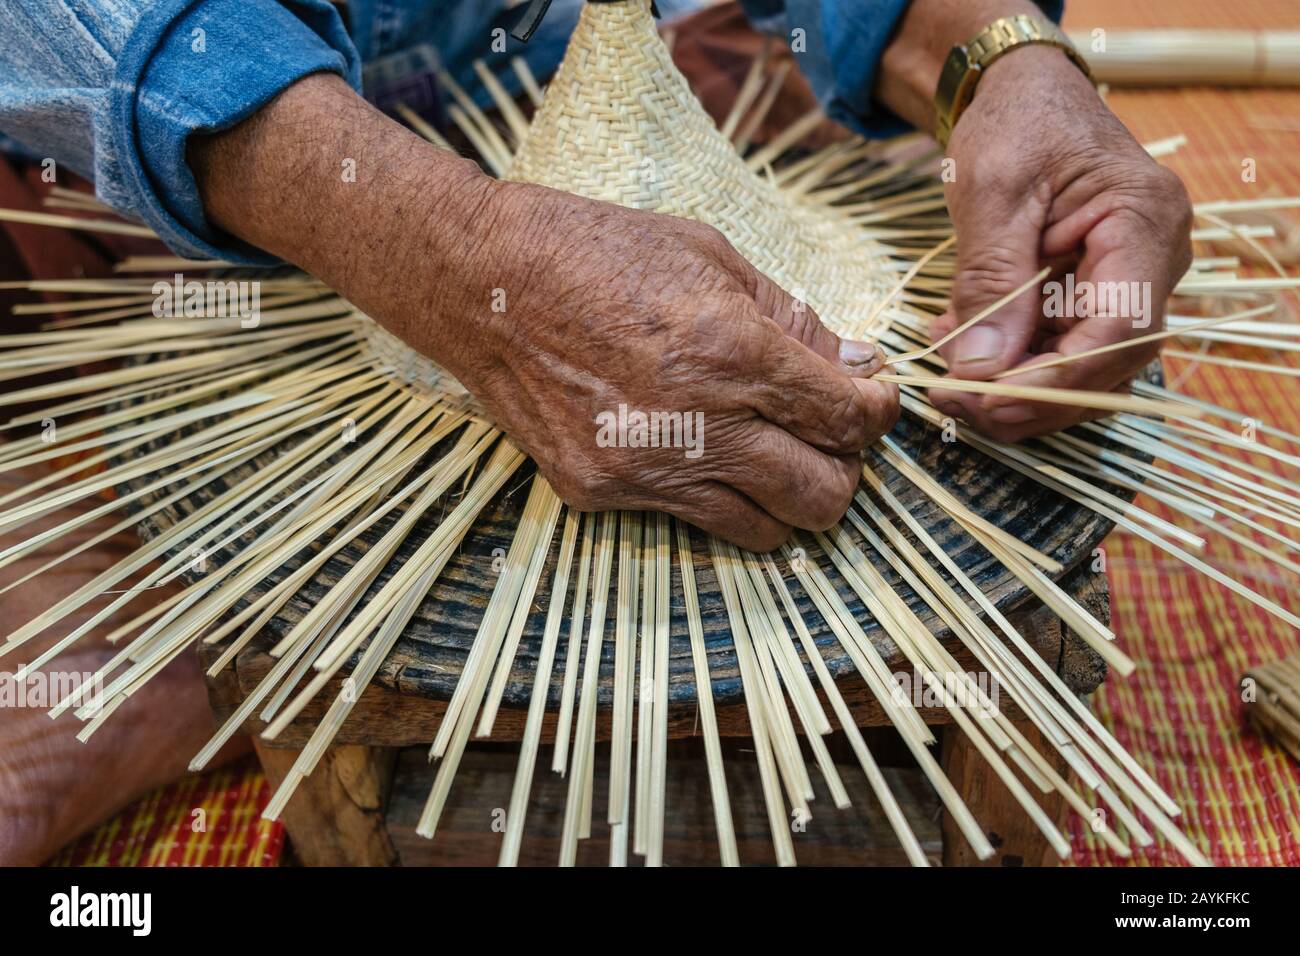 Hands of old artisan craftsman elderly working weaving rattan and ...